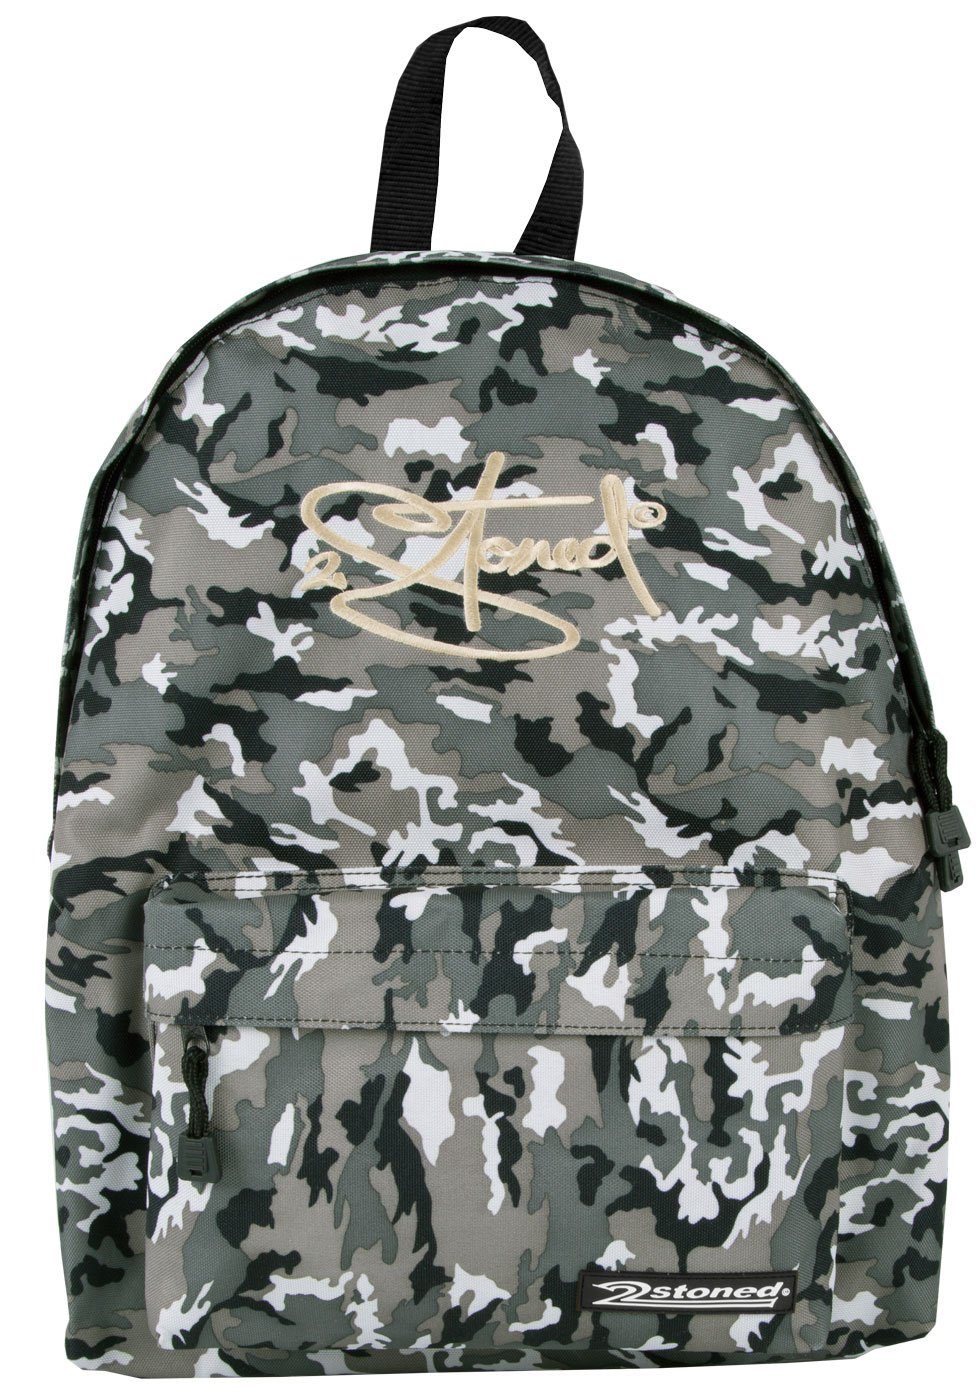 2Stoned Freizeitrucksack Ice Backpack Sportrucksack Camouflage, Classic mit in Camo Einlegeboden herausnehmbaren